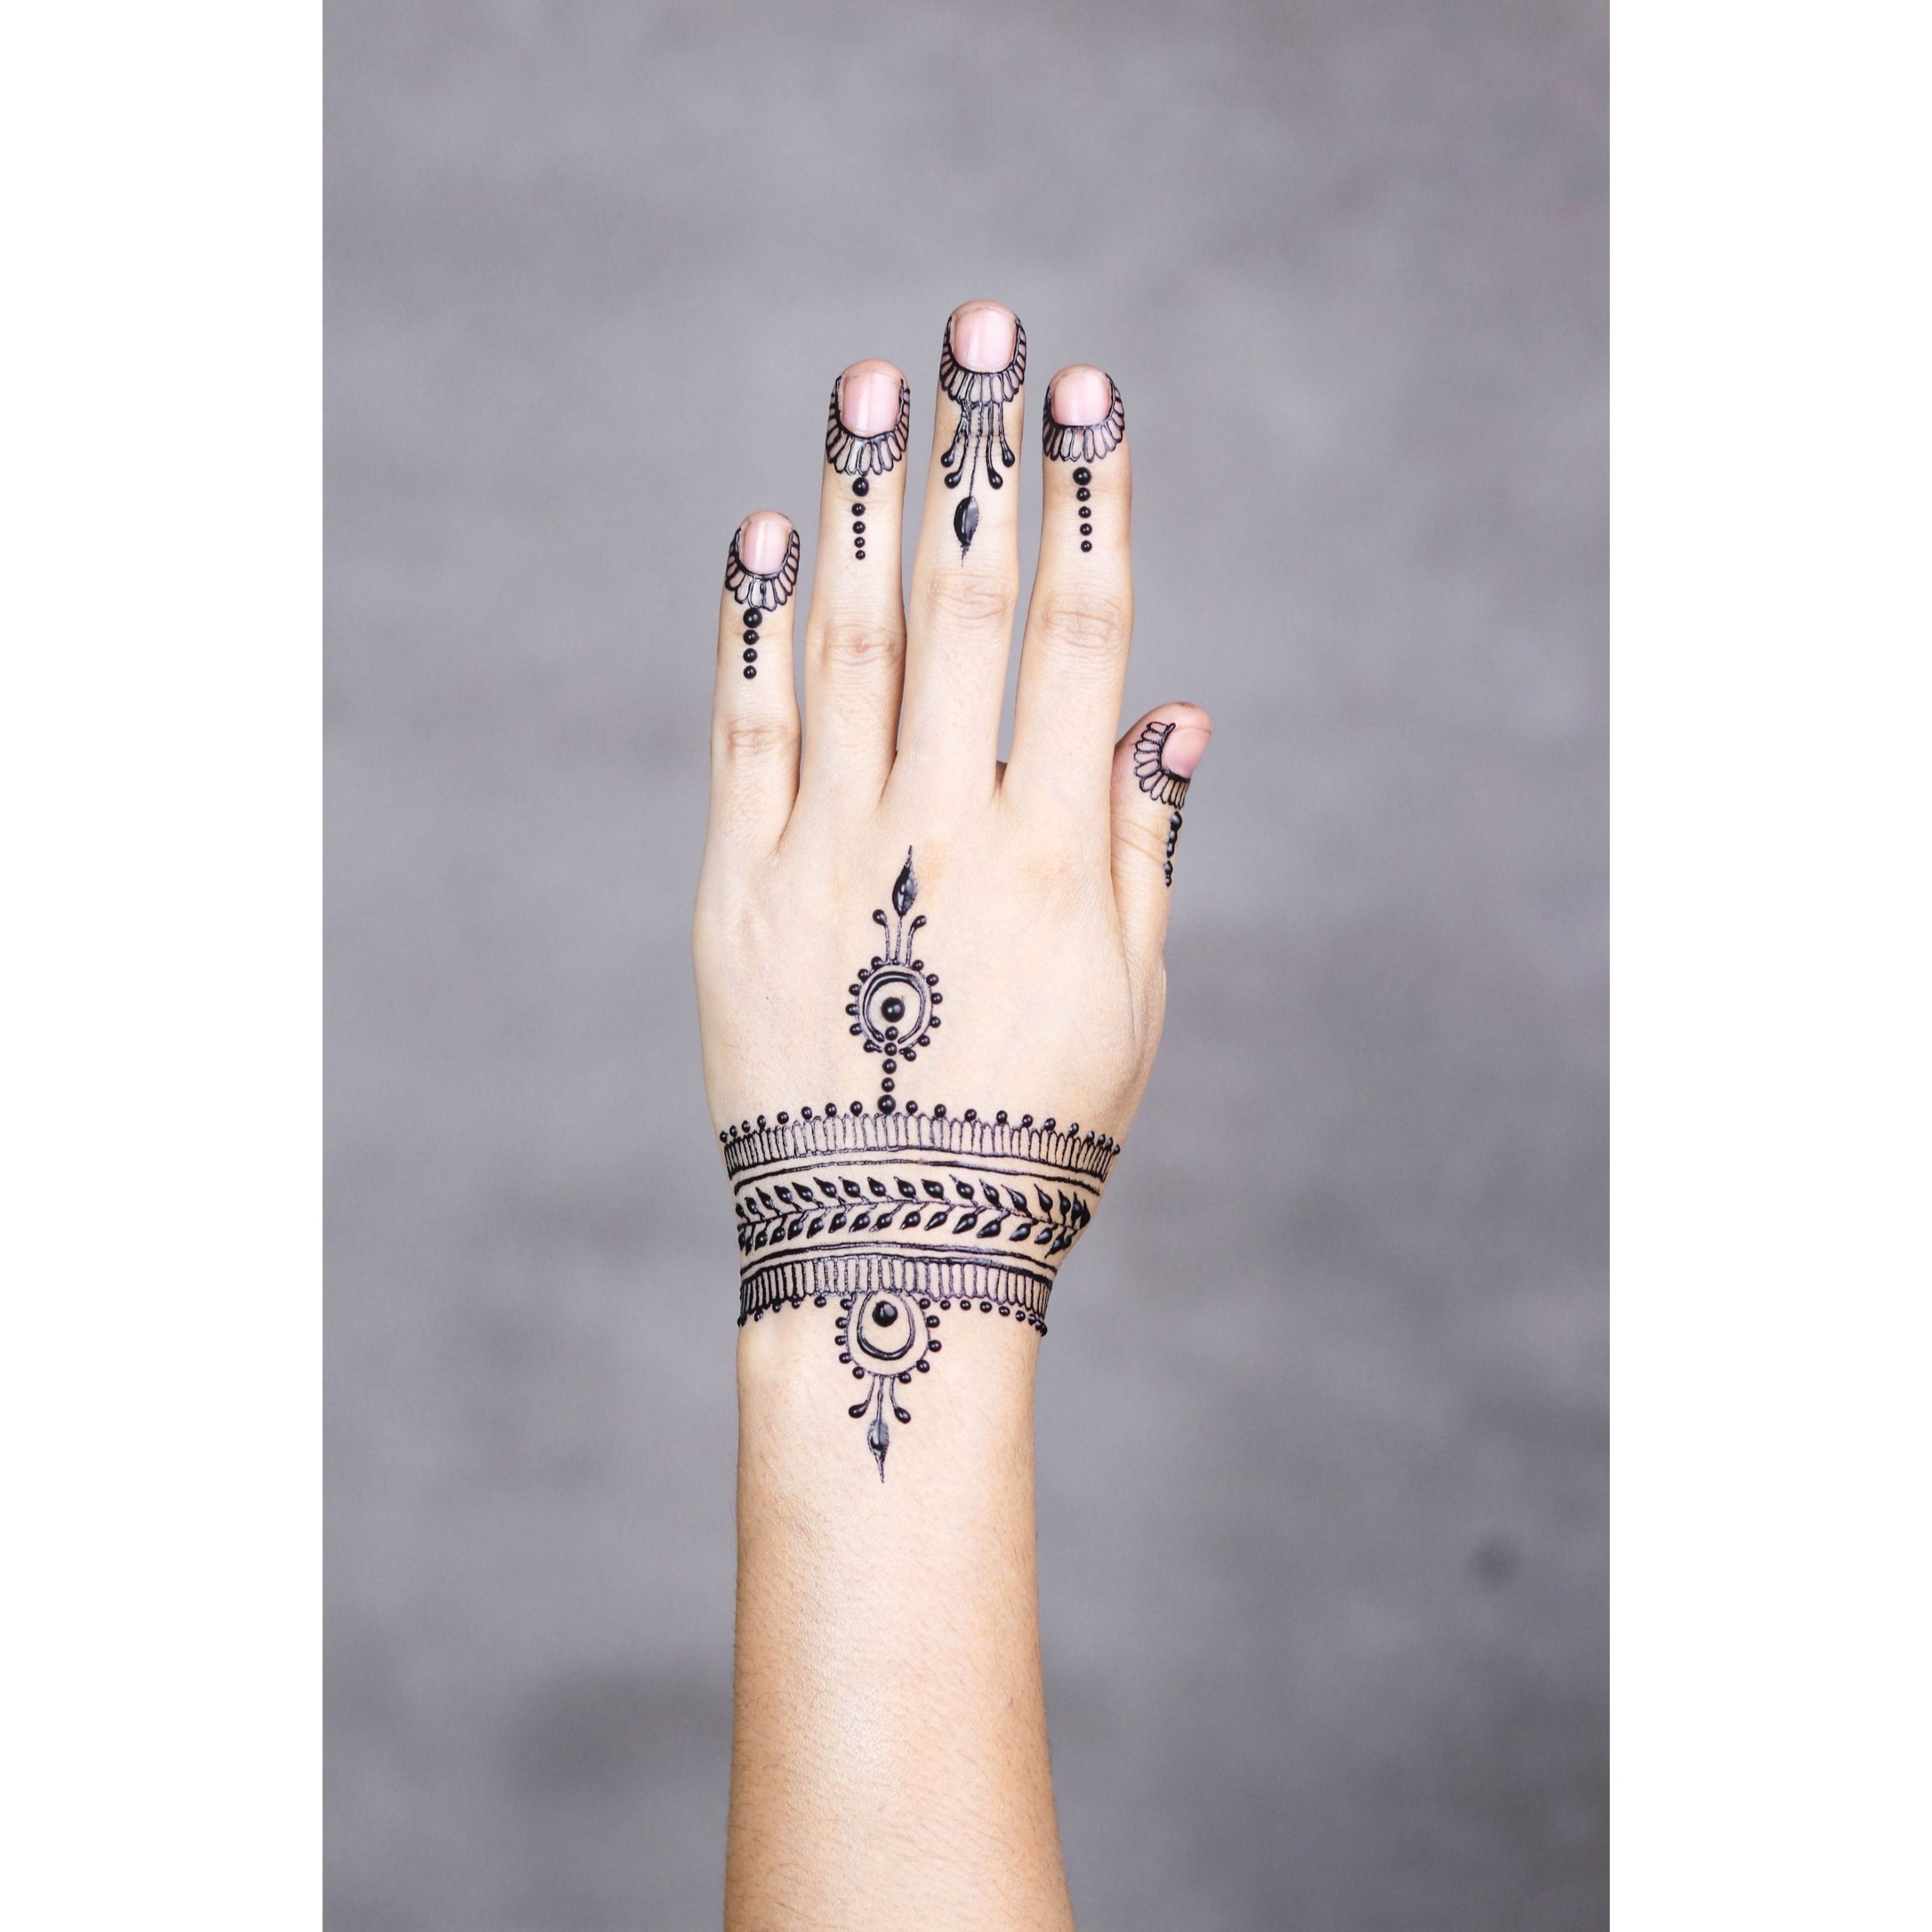 Arabic & Simple Mehendi Designs for Elegant Henna Art